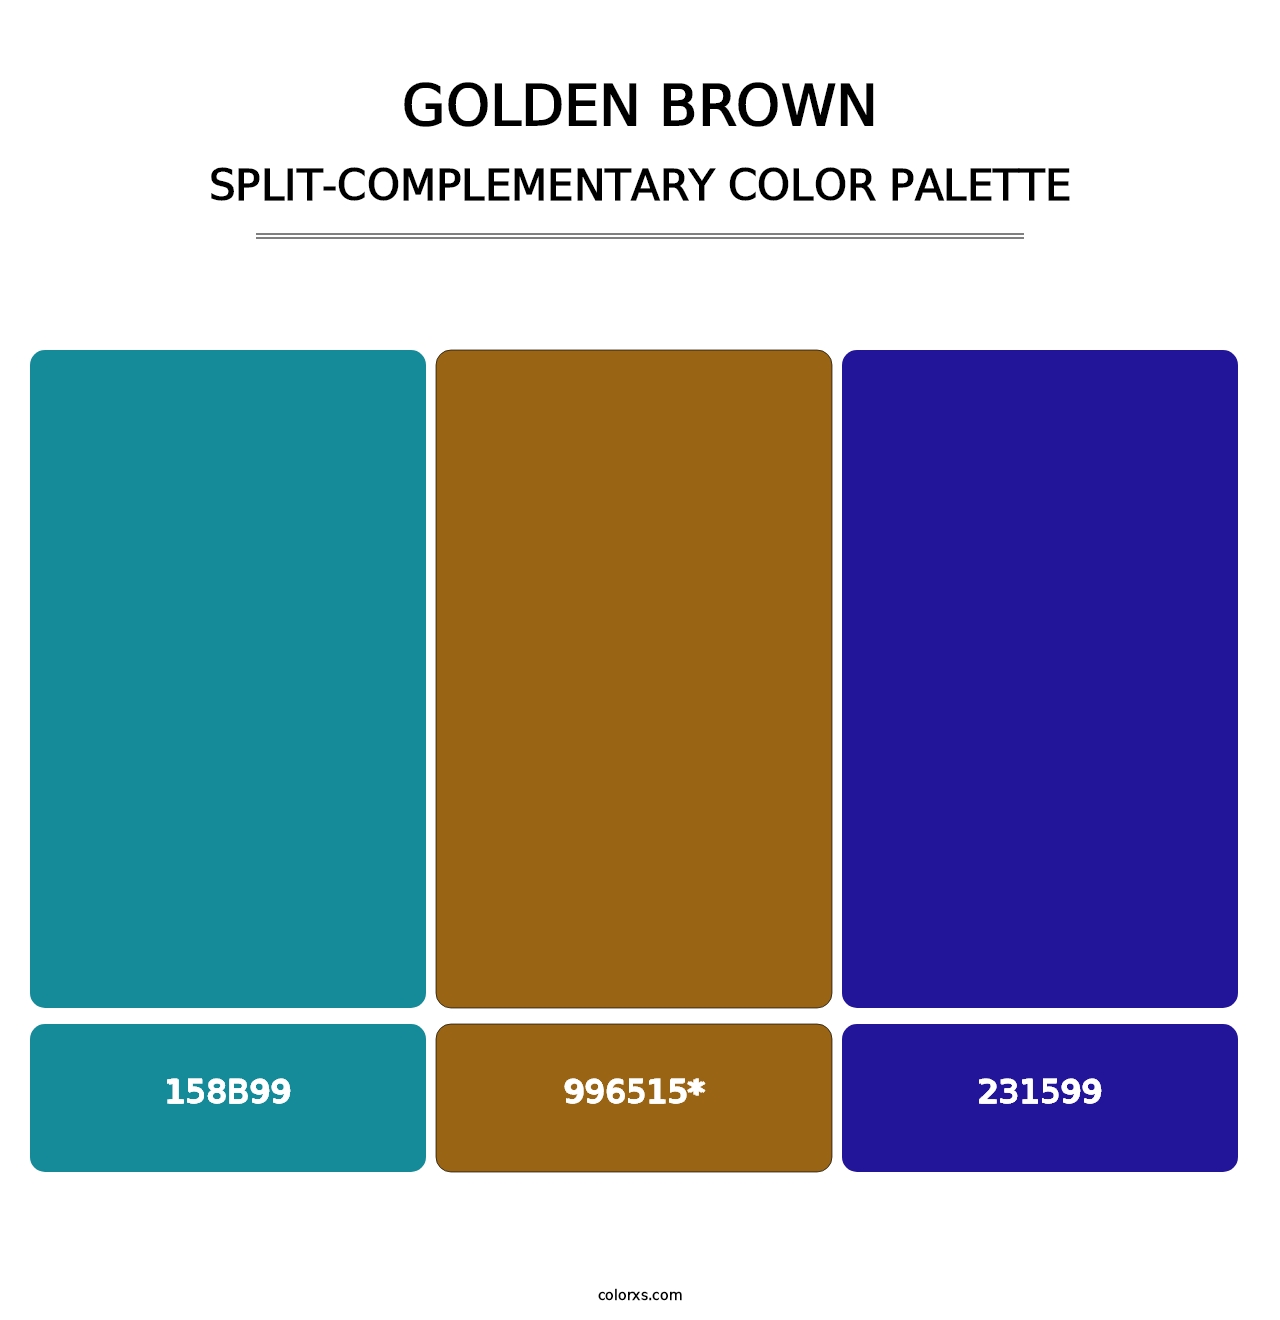 Golden brown - Split-Complementary Color Palette